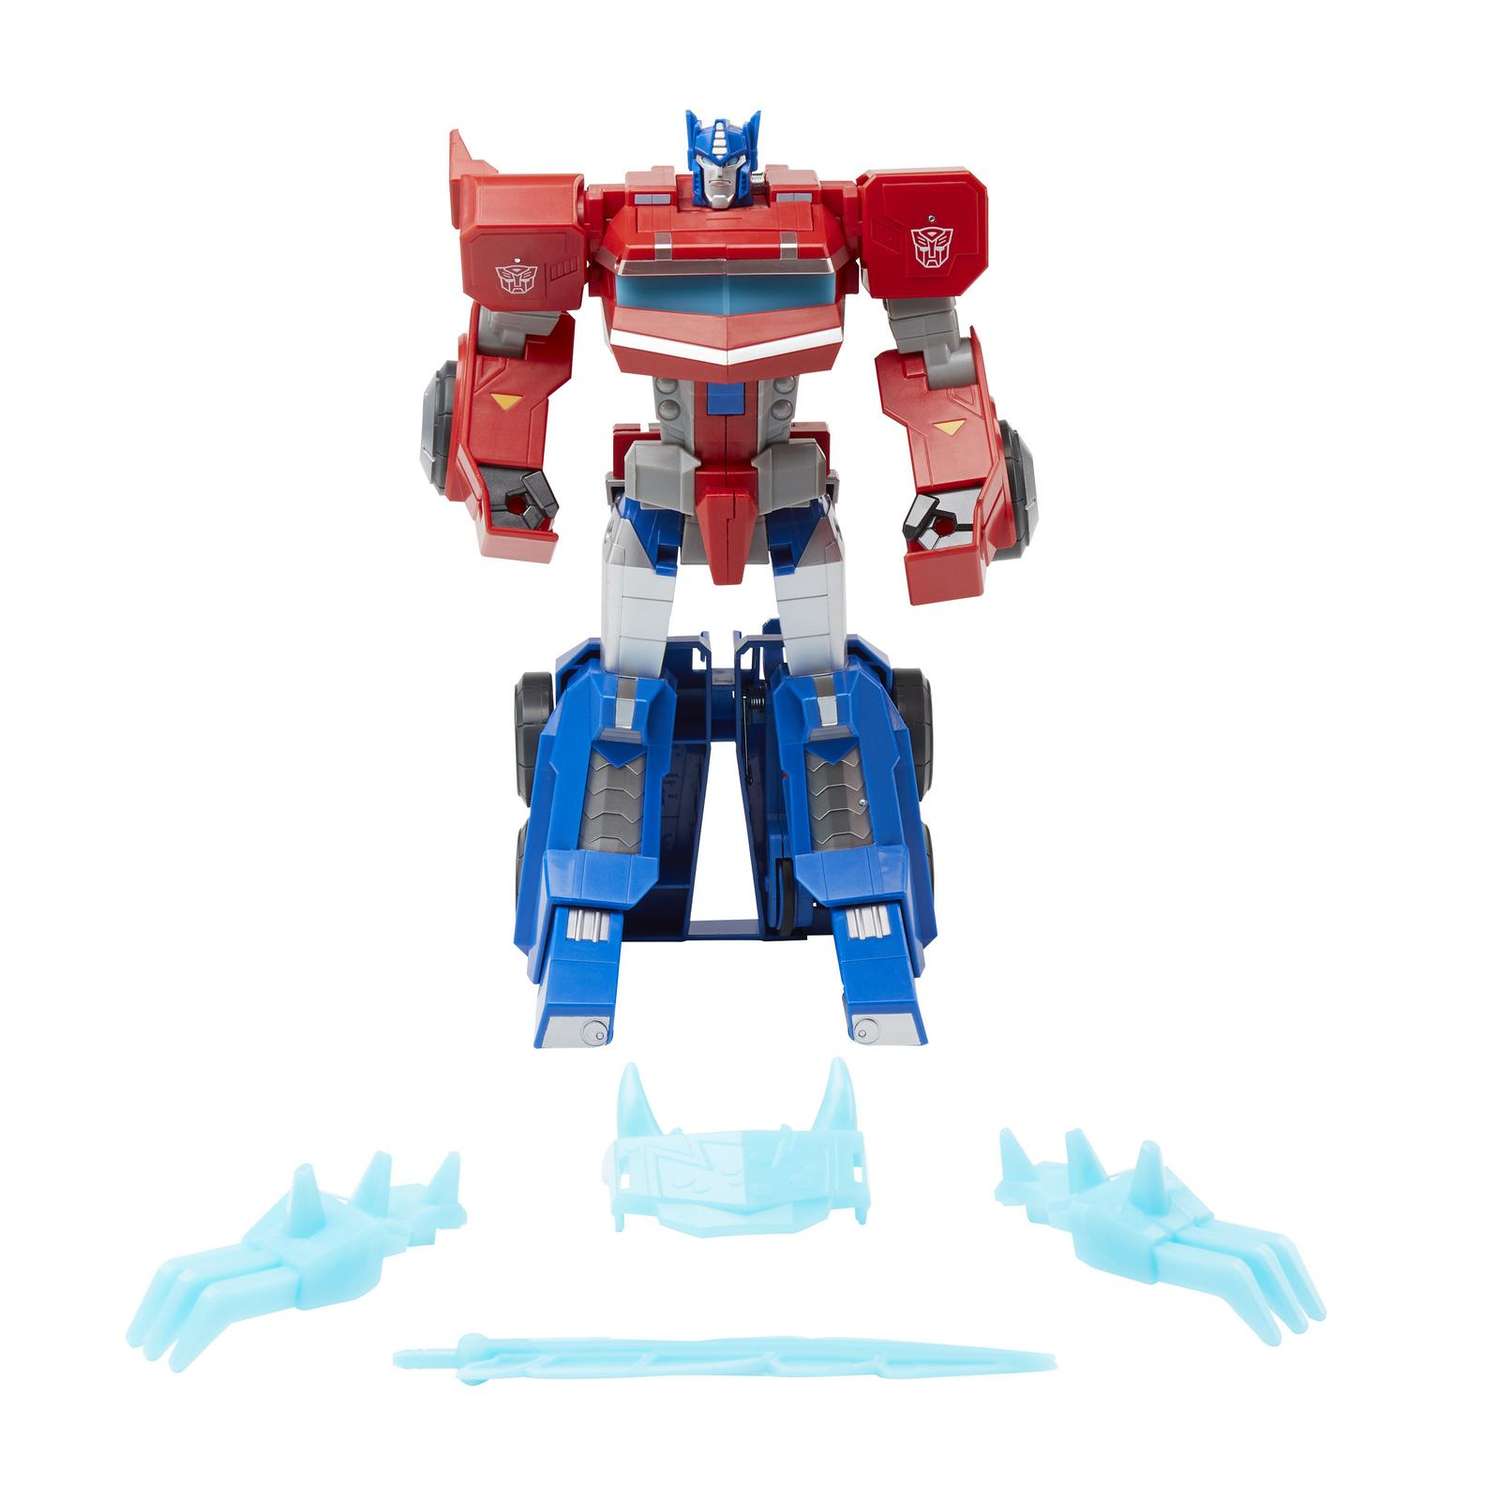 Фигурка Transformers Оптимус Прайм с автоматической трансформацией F27315X6 - фото 6